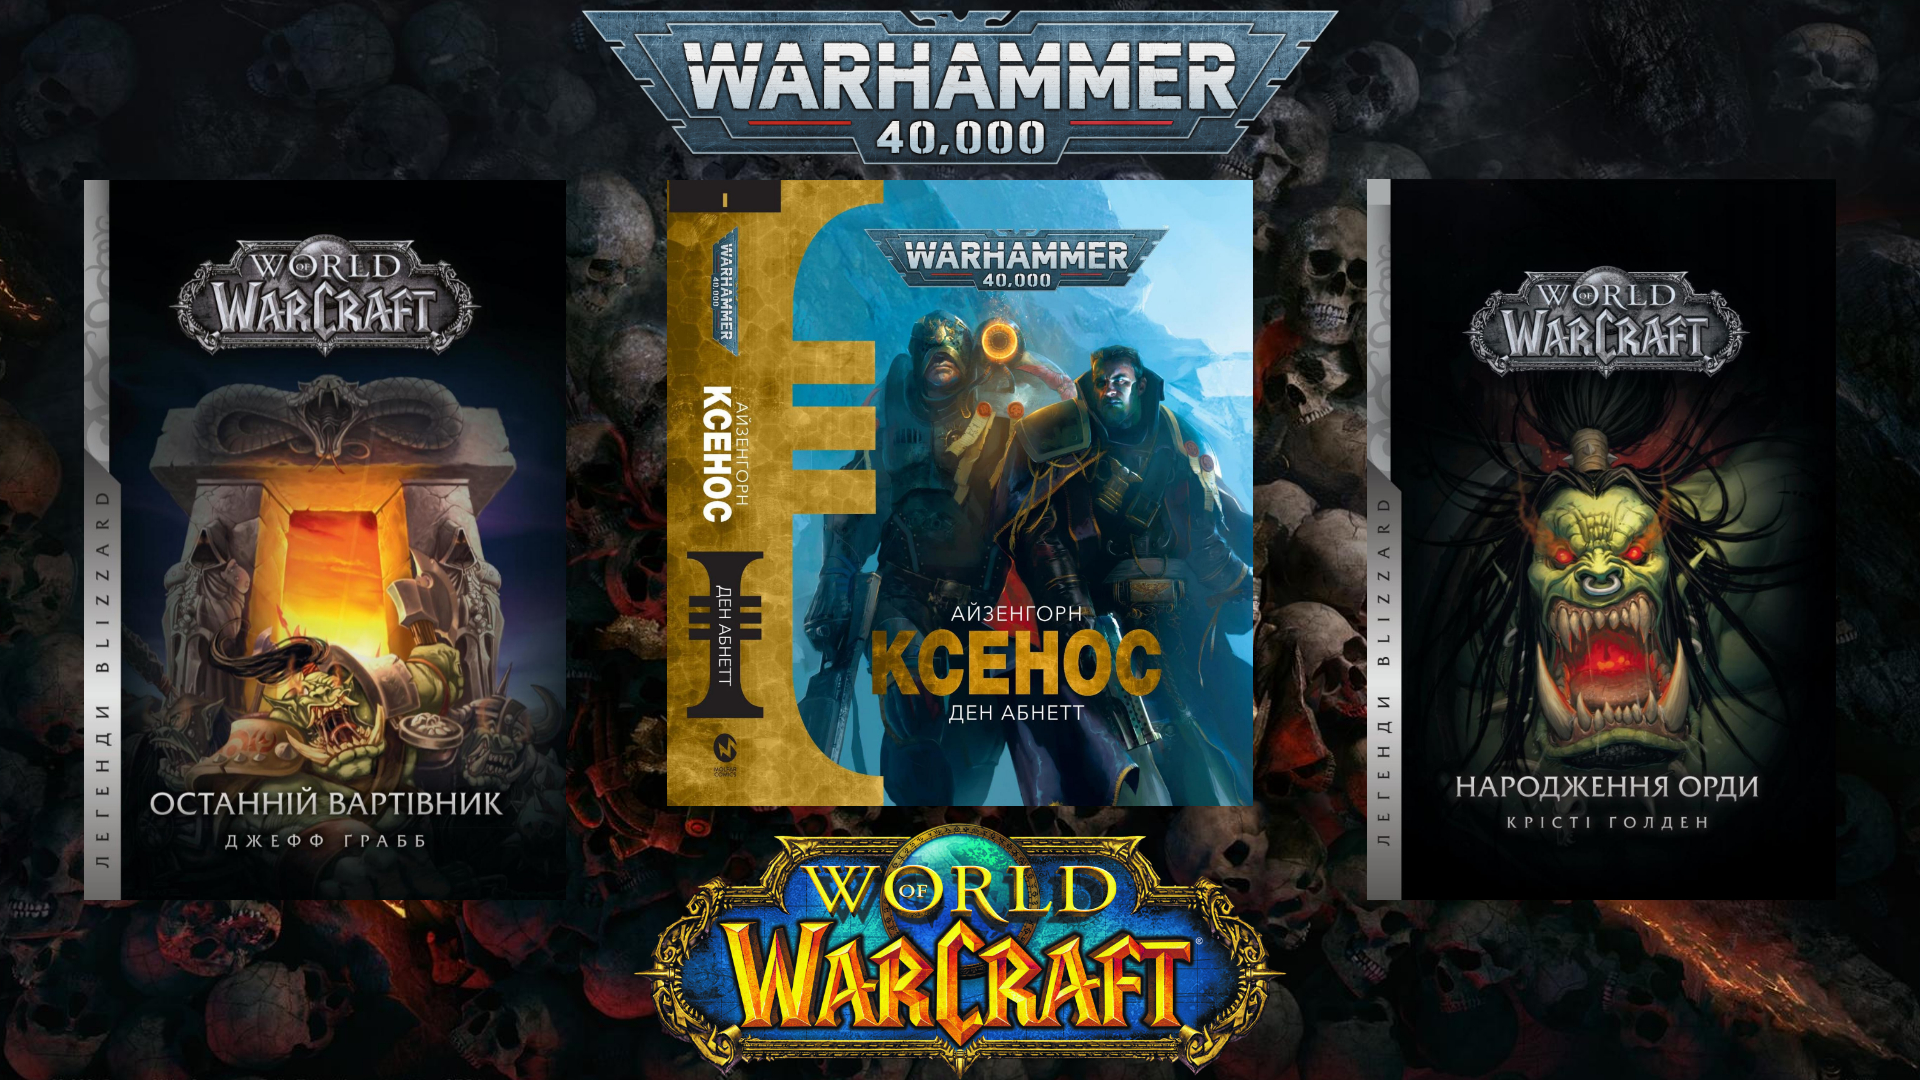 ⚔️ Warhammer i Warcraft ukraїnśkoju vid Molfar Comics •|• Interv'ju z vydavcem ta perekladačamy